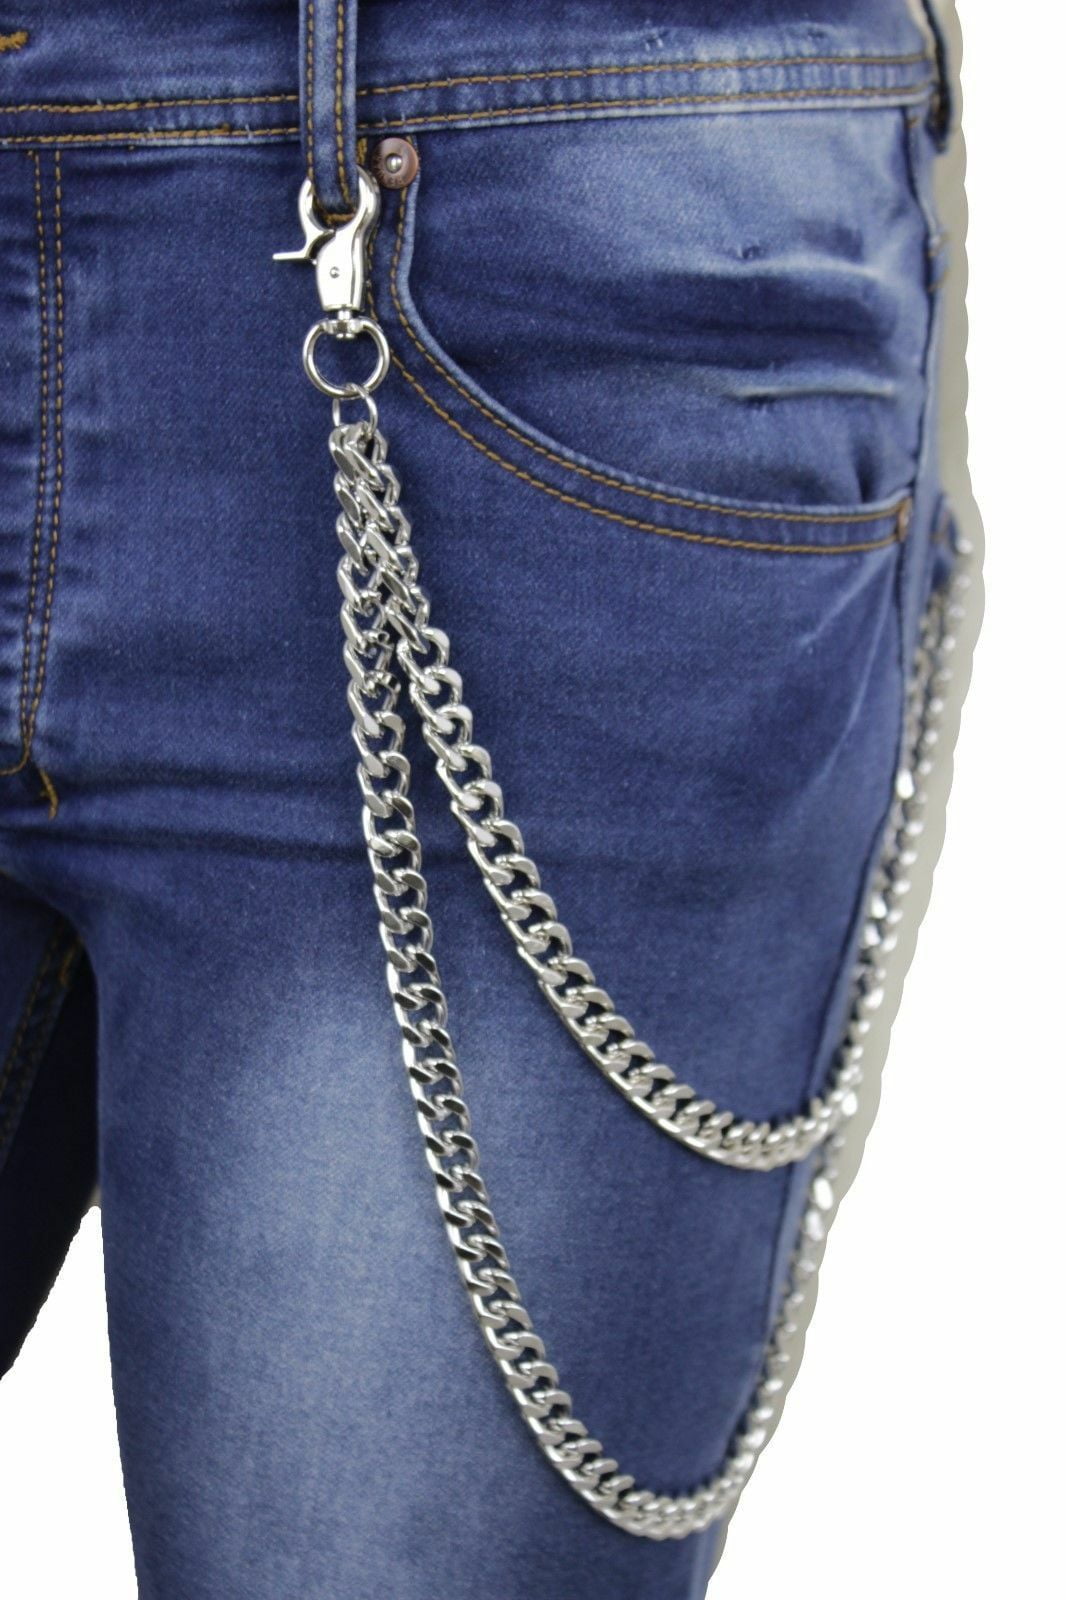 Long Silver Hipster/Lobst Keyring Jeans Wallet Belt Key Chain Ring Gothic Biker